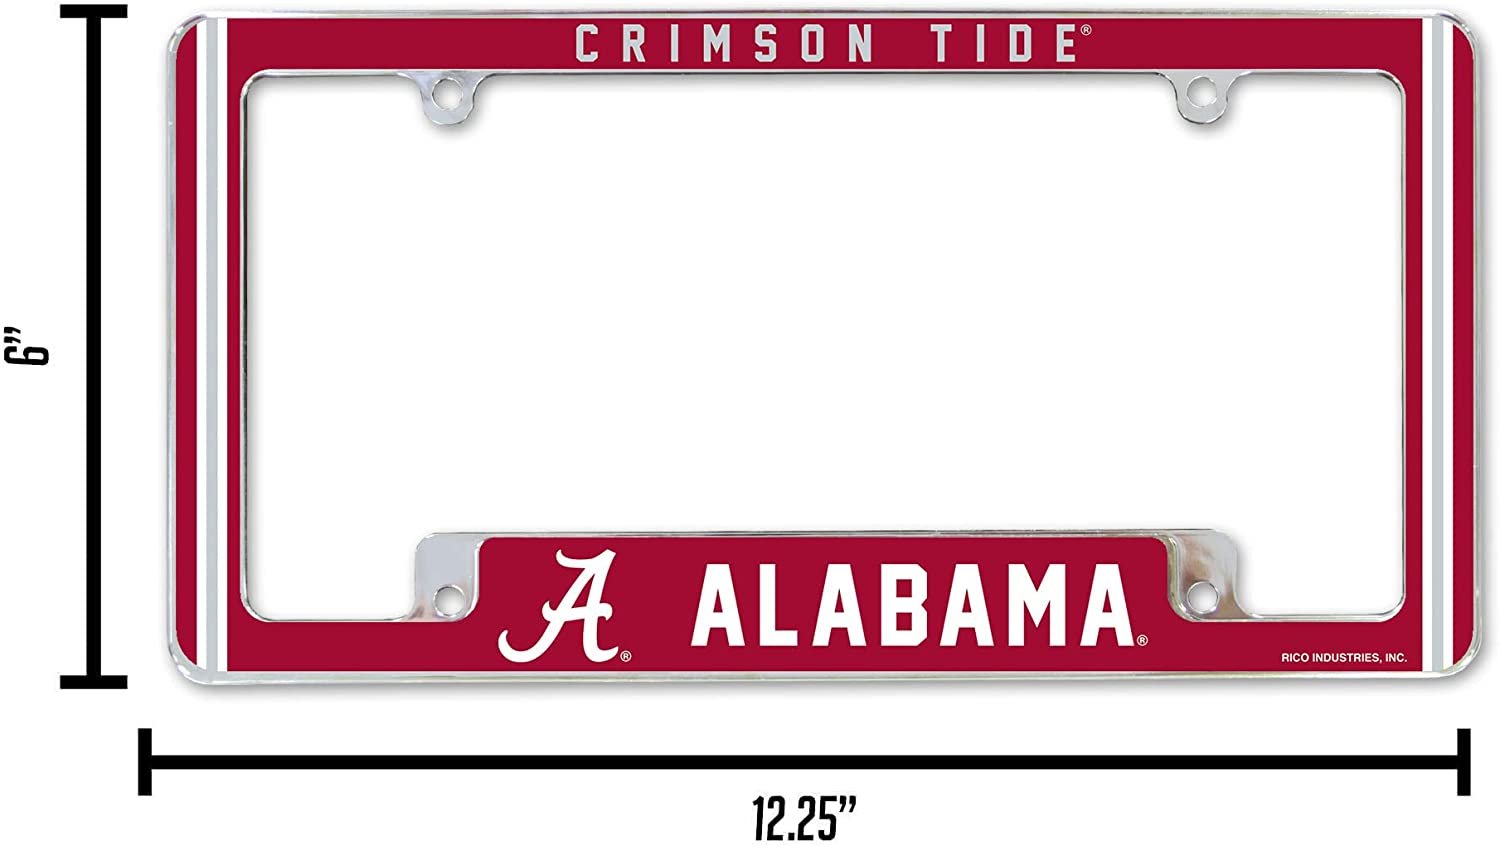 University of Alabama Crimson Tide Metal License Plate Frame Chrome Tag Cover 12x6 Inch Alternate Design